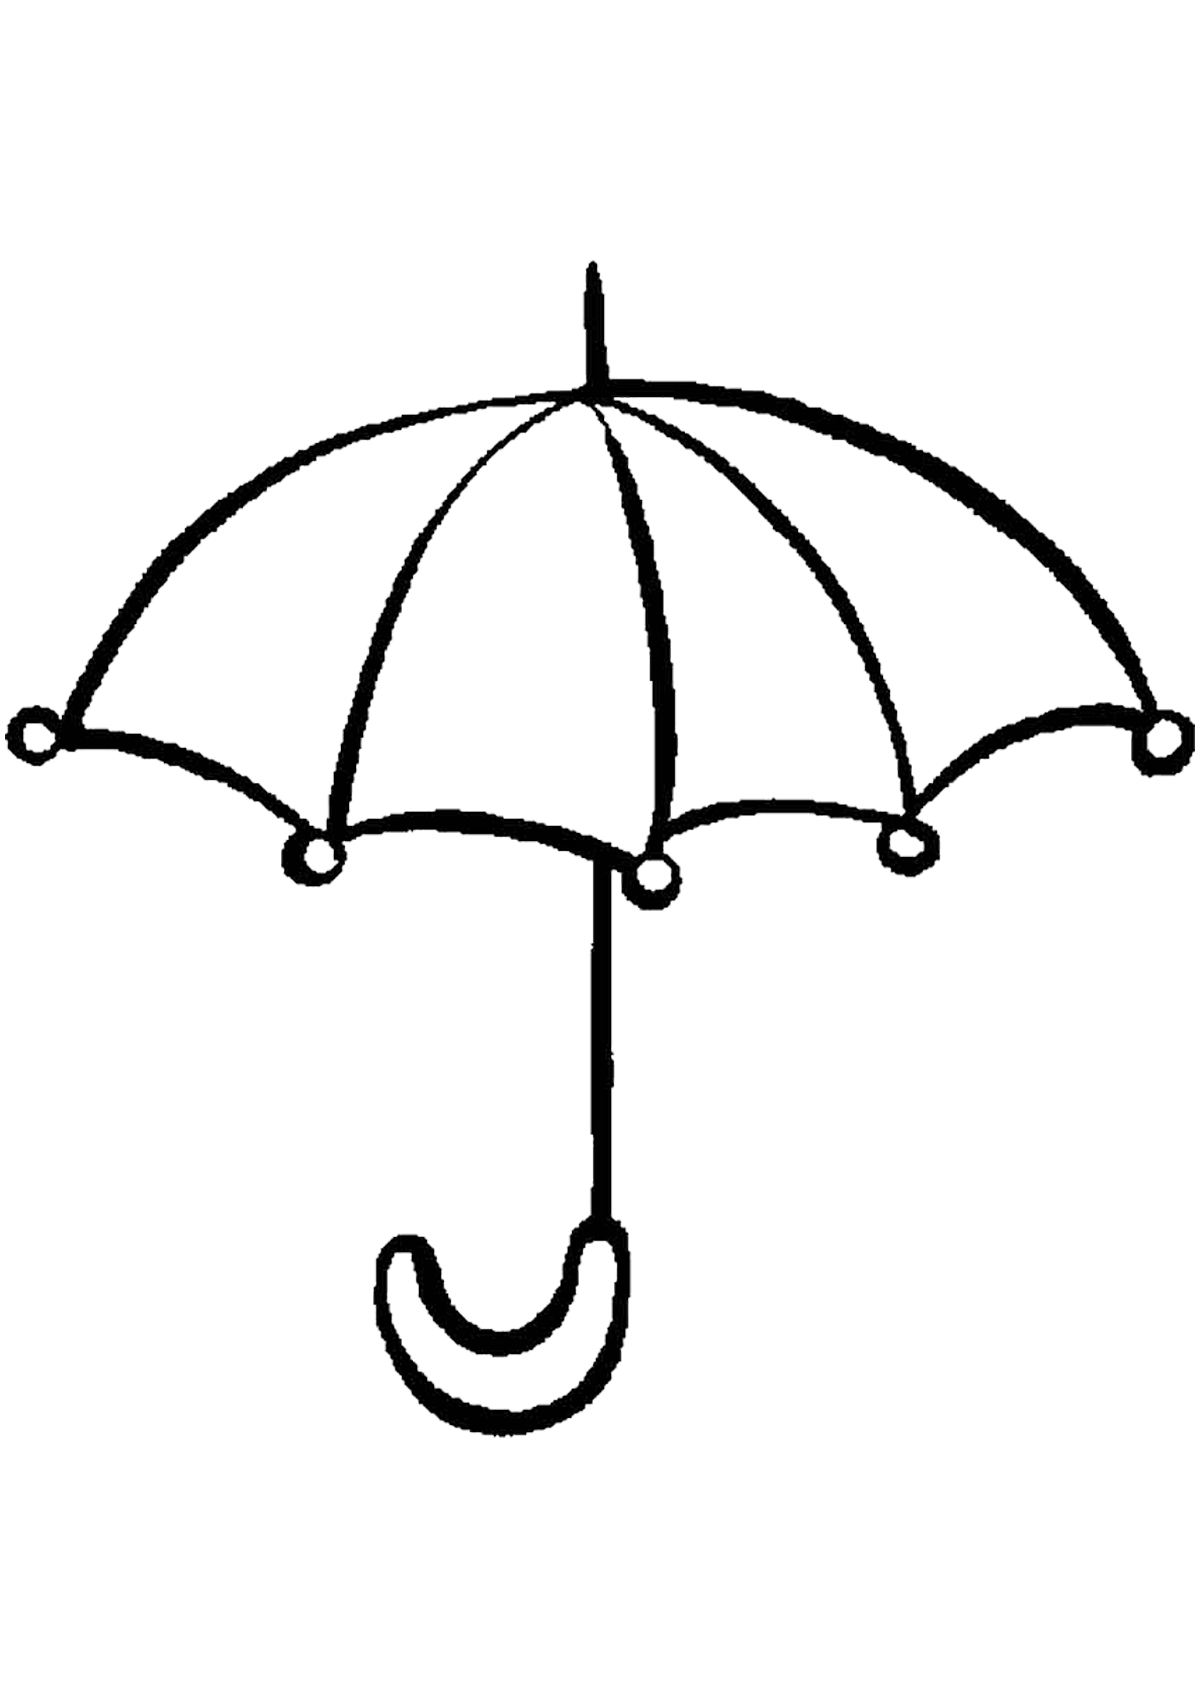 Umbrella Coloring Page Free Printable - 318+ SVG Cut File